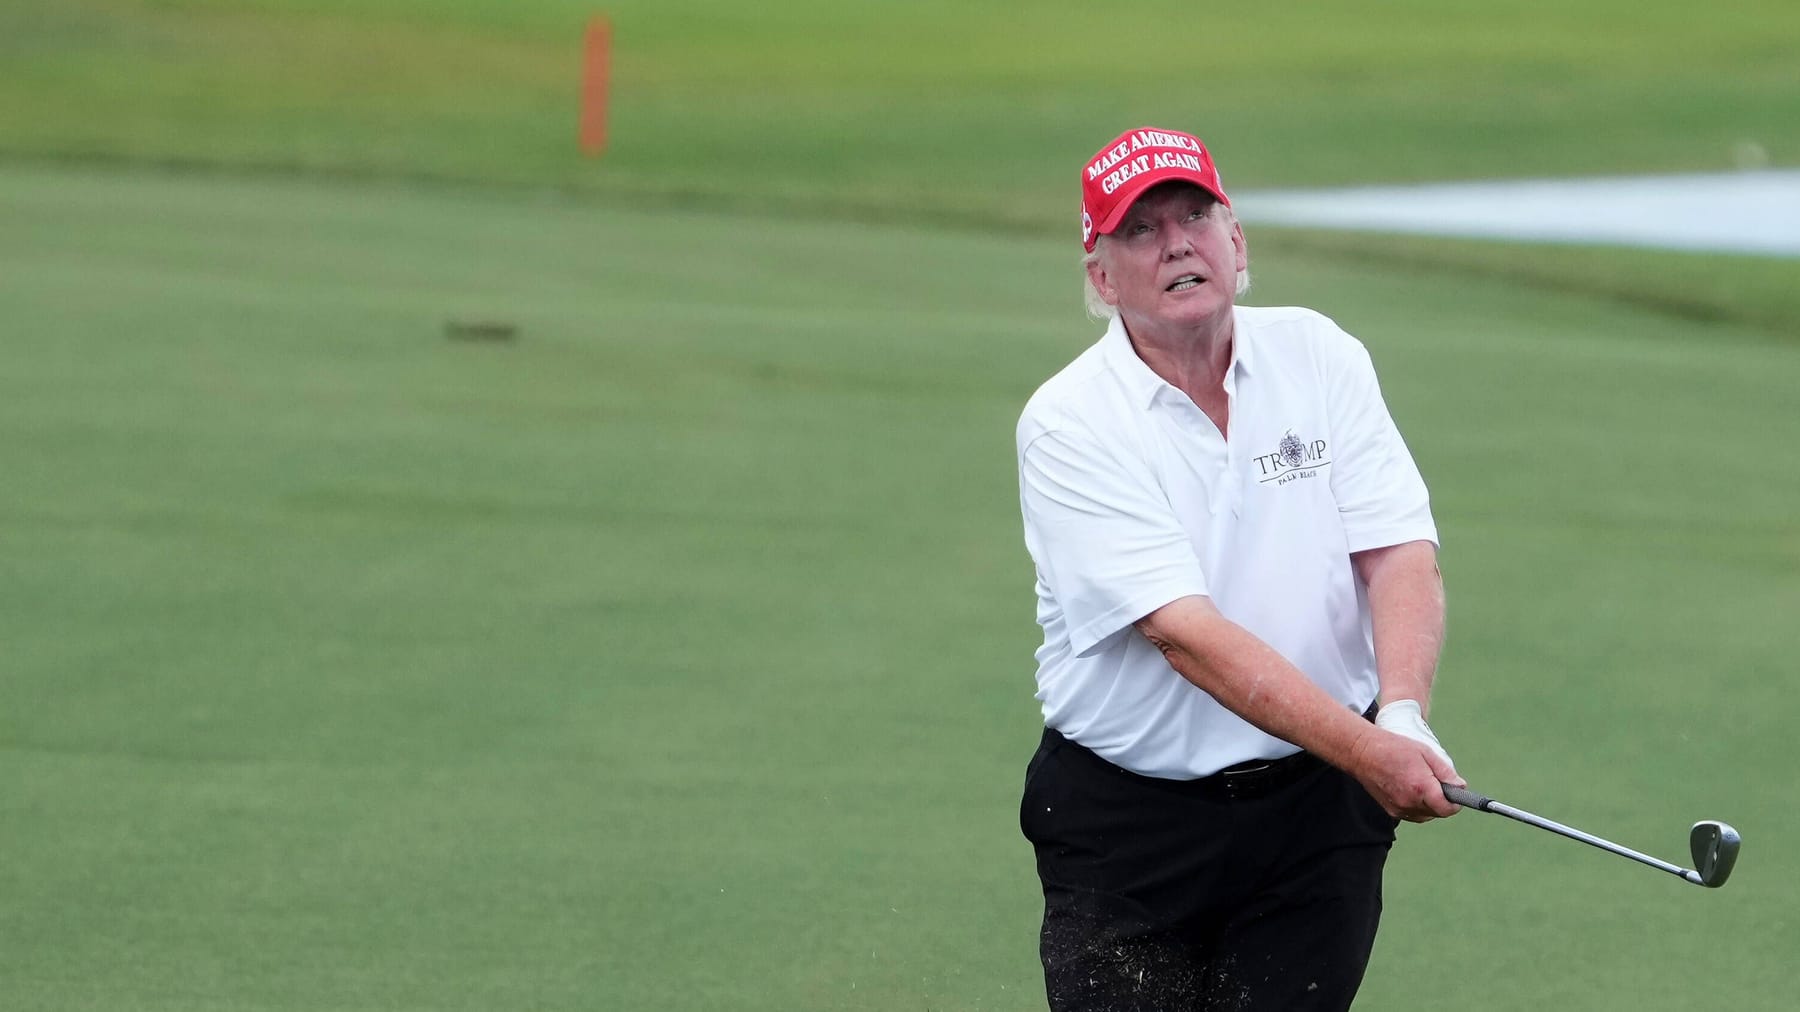 Mantan Presiden Donald Trump menipu dirinya sendiri untuk memenangkan turnamen golf